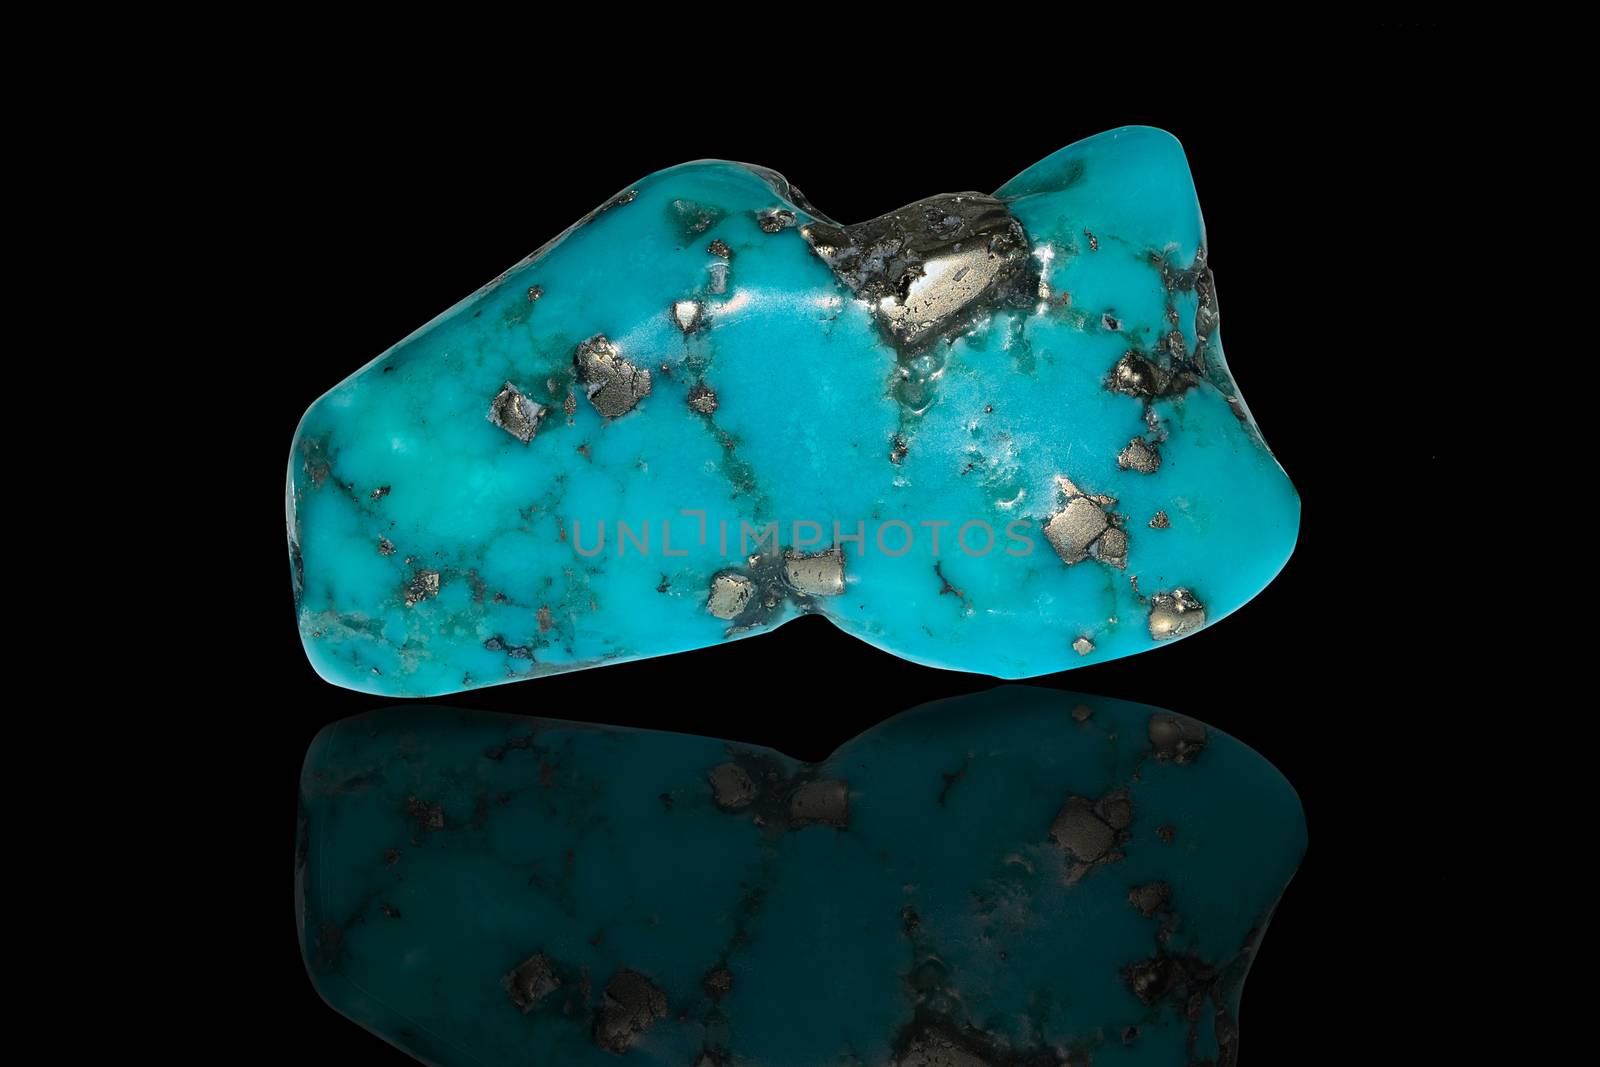 Sample of a beautiful Turquoise tumbled stone specimen isolated on black background